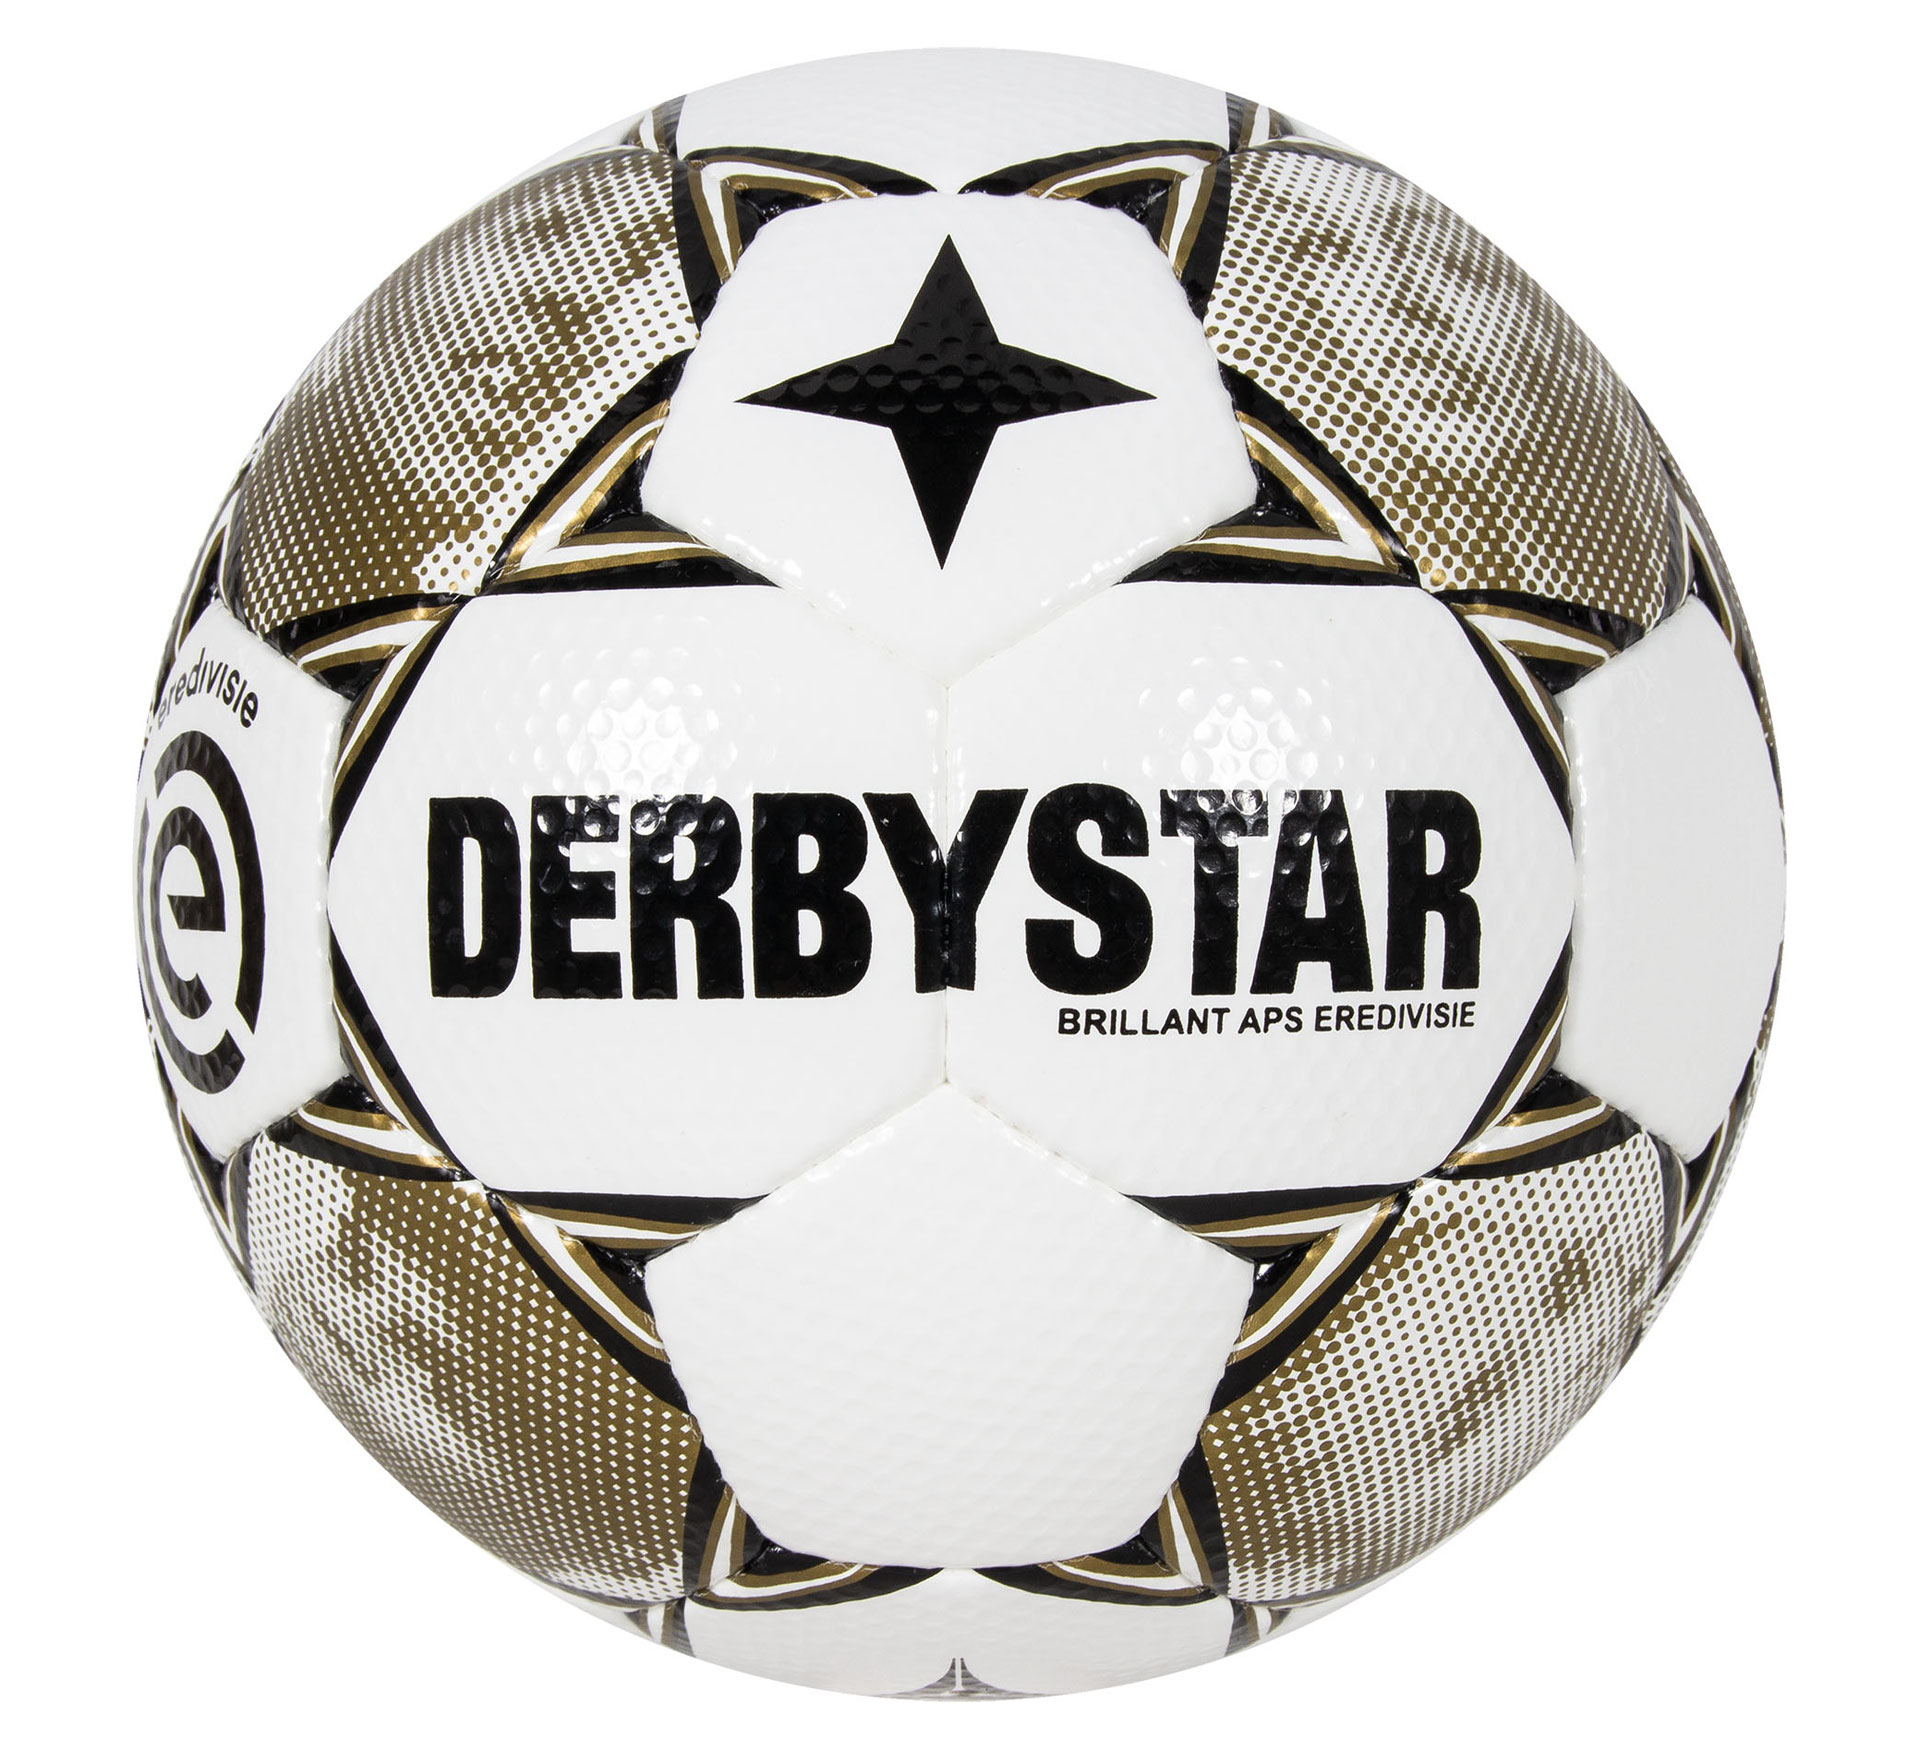 Ballon de football Derbystar Eredivisie Brillant APS 20/21